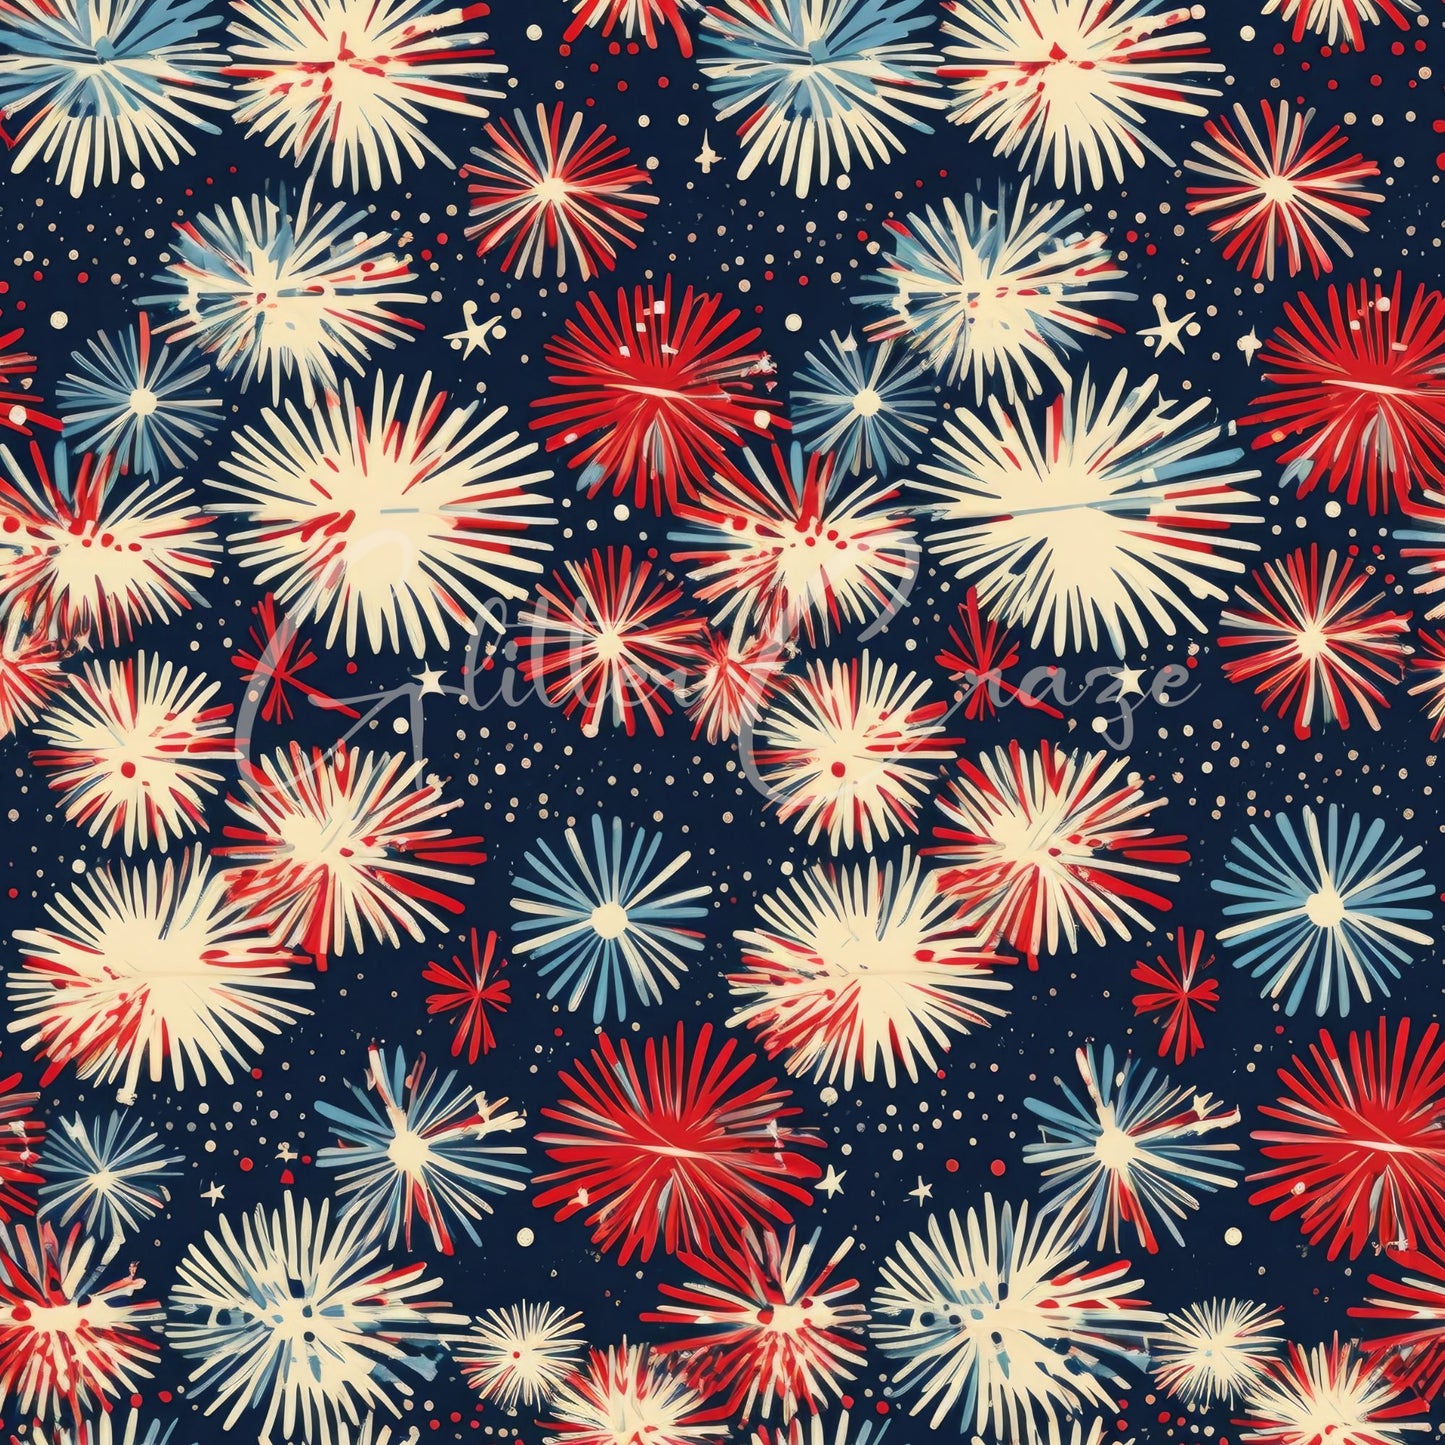 Fireworks 12x12 sheets - 10 Design Options